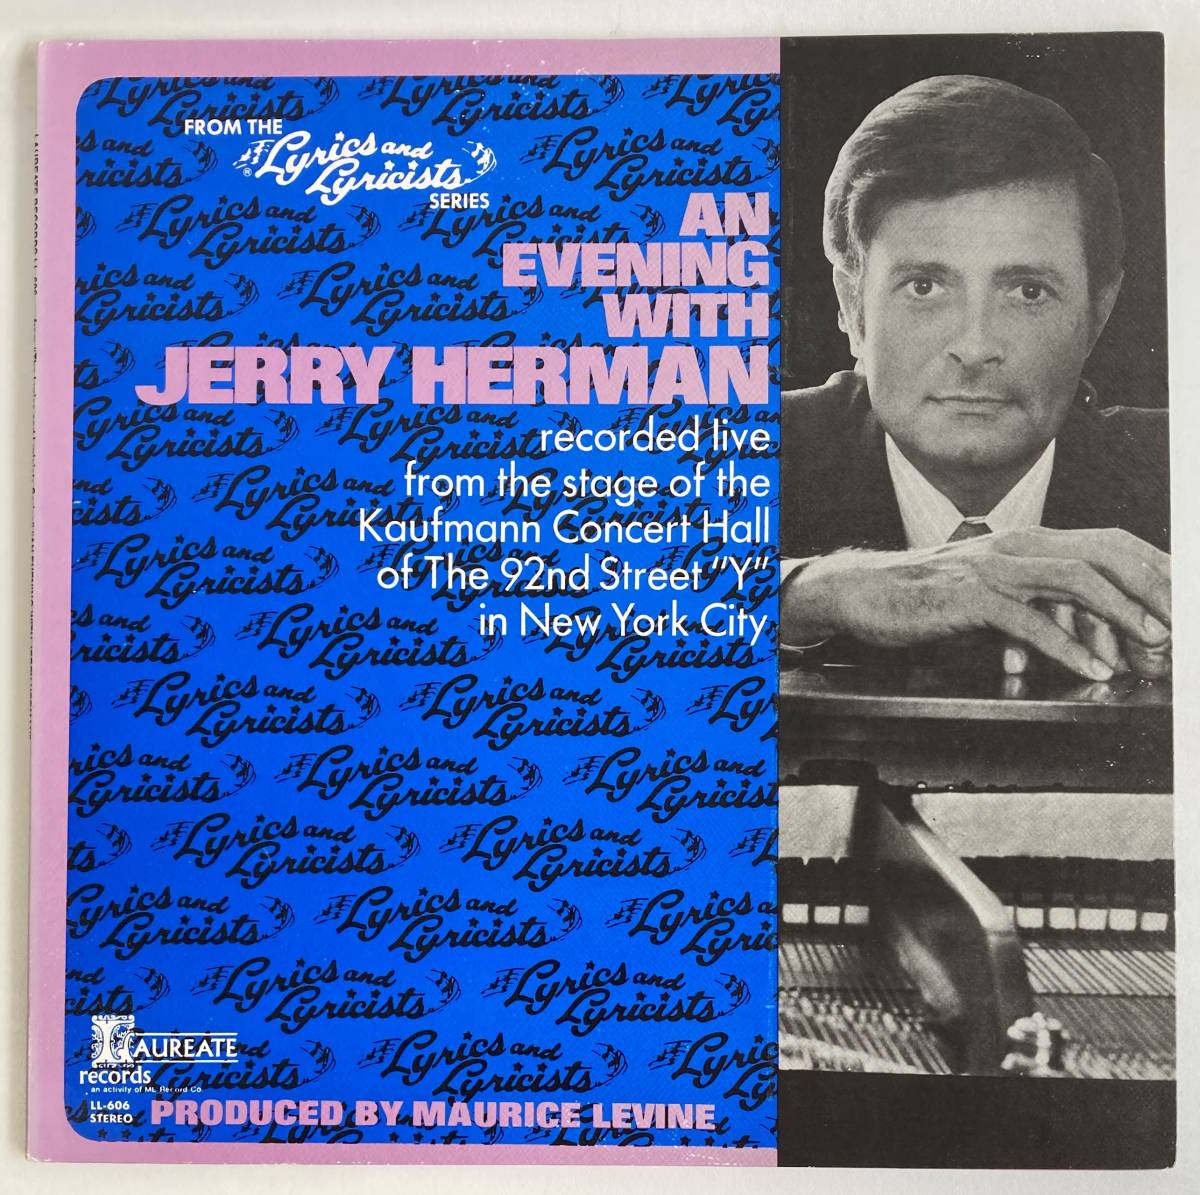 An Evening with Jerry Herman / рис запись LP Laureate LL-606 STEREO видеть открытие 